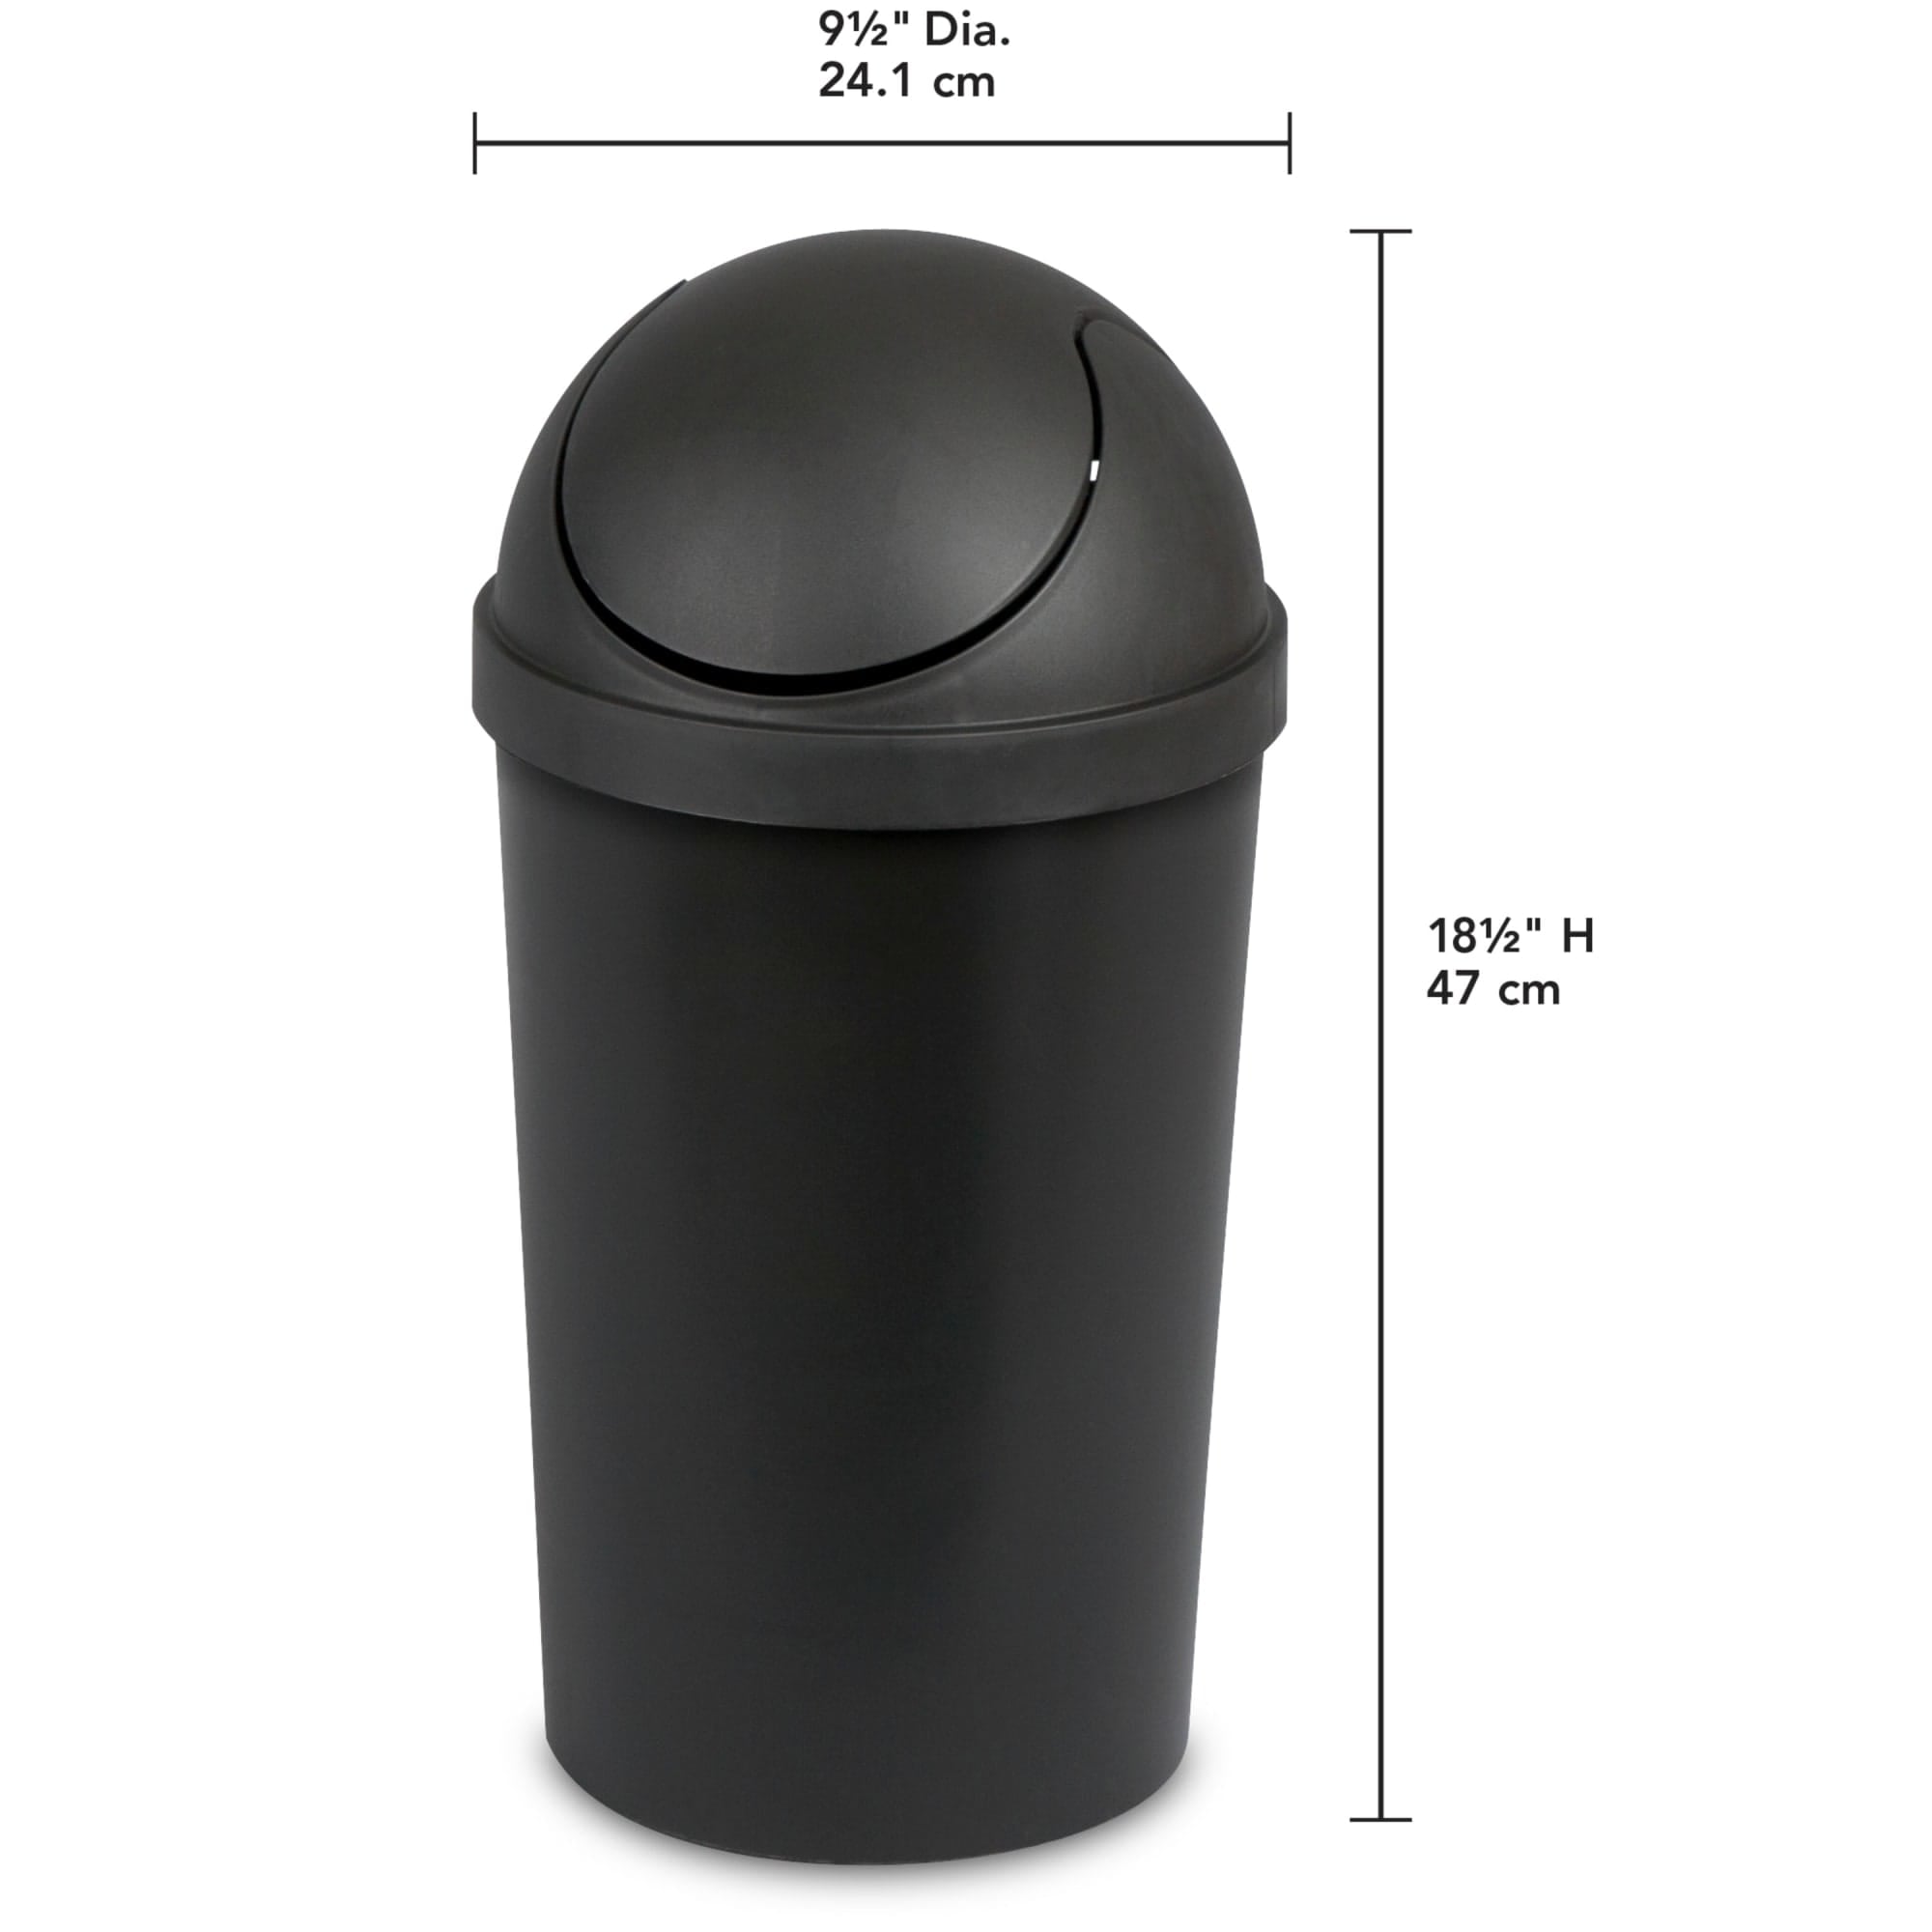 Sterilite 3 Gallon / 11.4 Liter Round SwingTop Wastebasket Black $7.00 EACH, CASE PACK OF 6